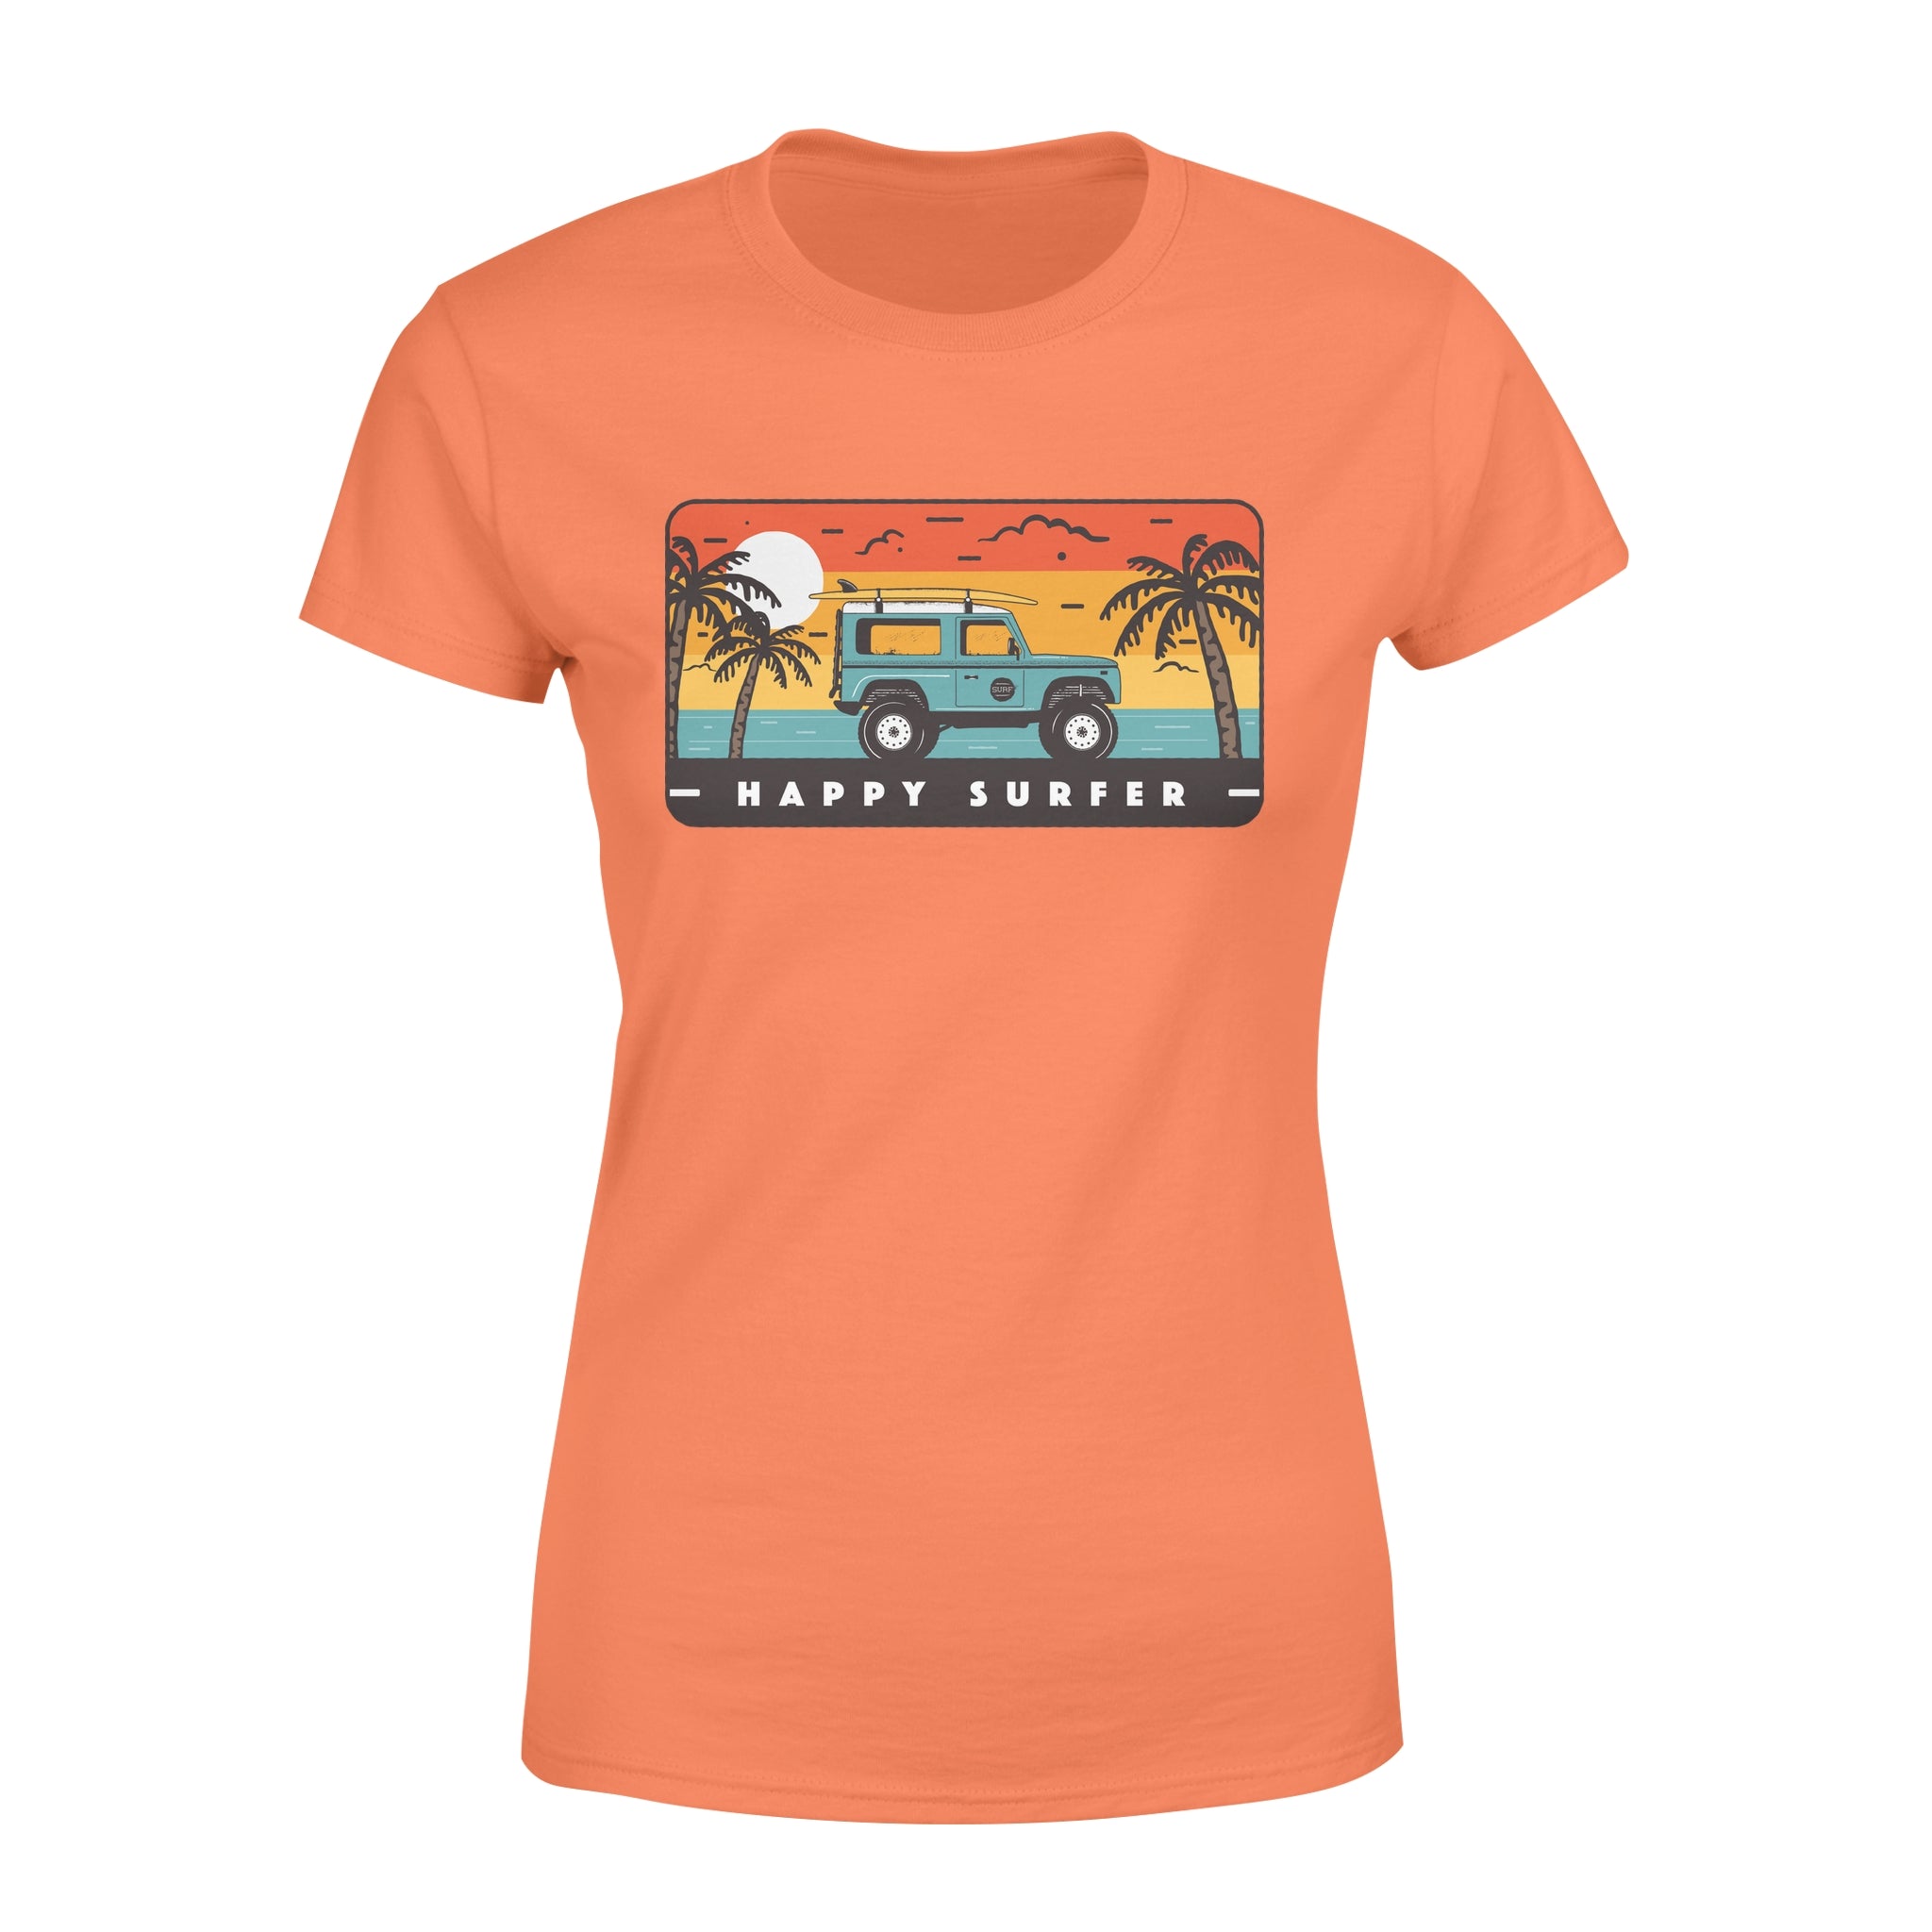 Happy Surfer - Women's T-shirt